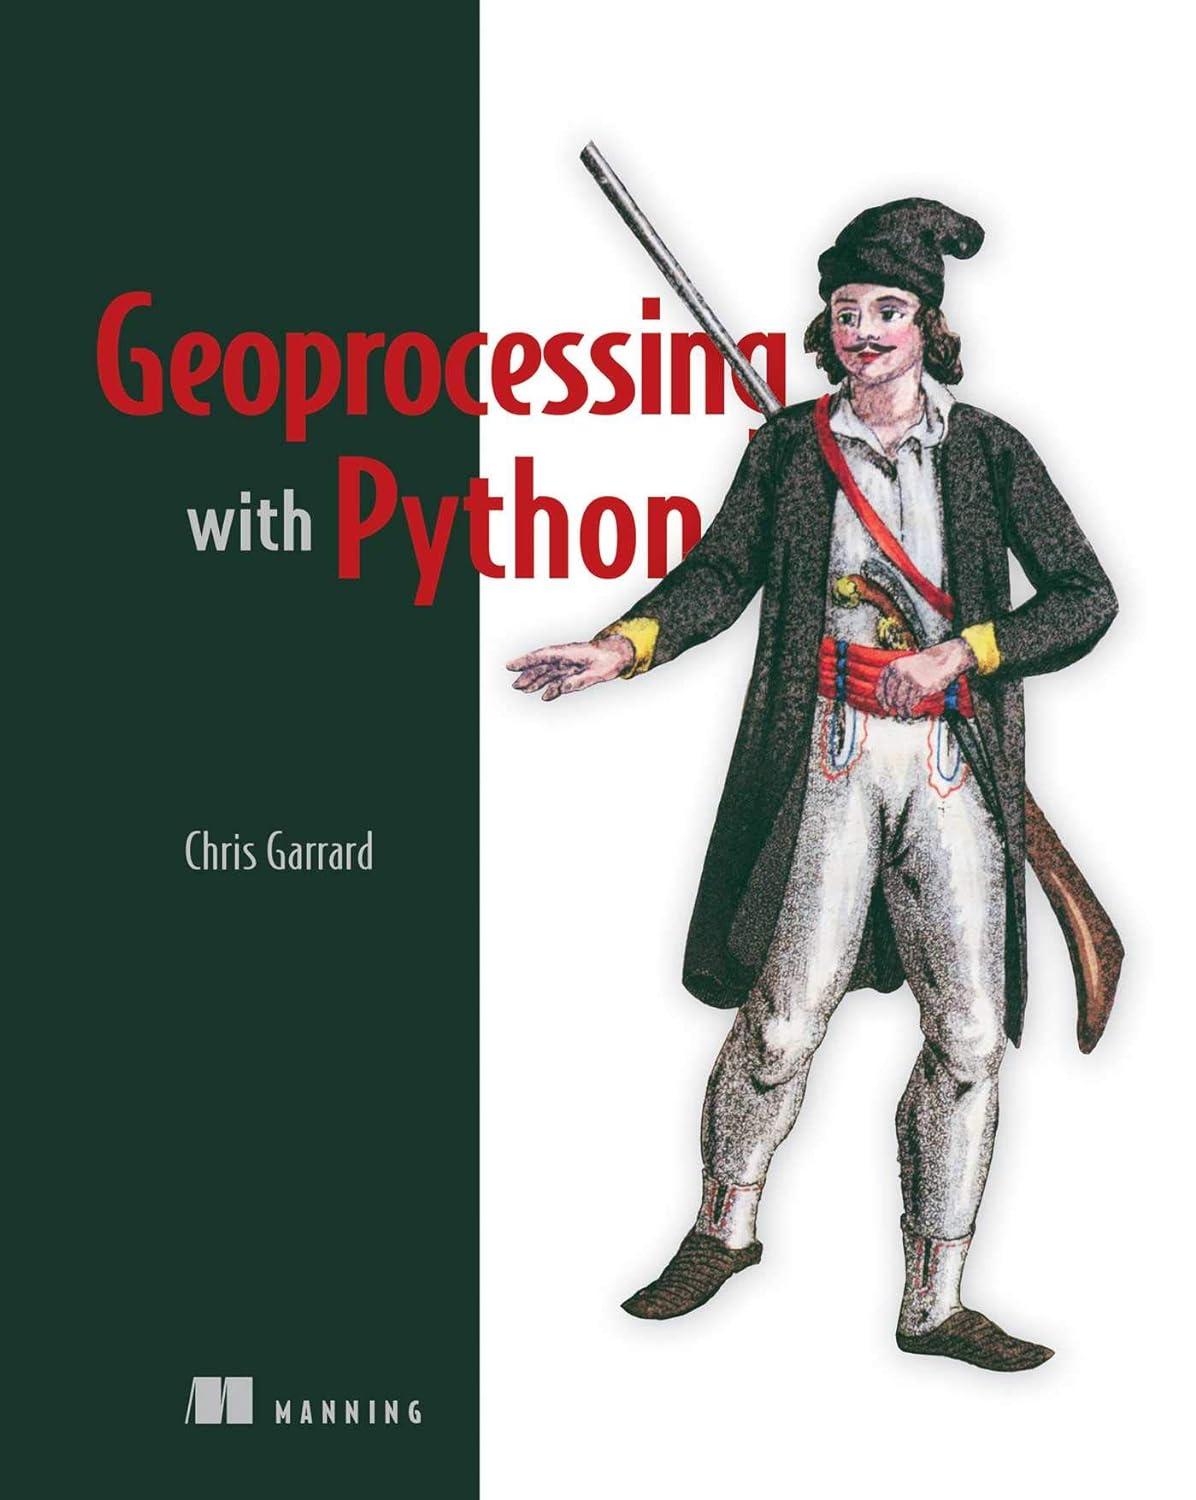 geoprocessing with python 1st edition chris garrard 1617292141, 978-1617292149